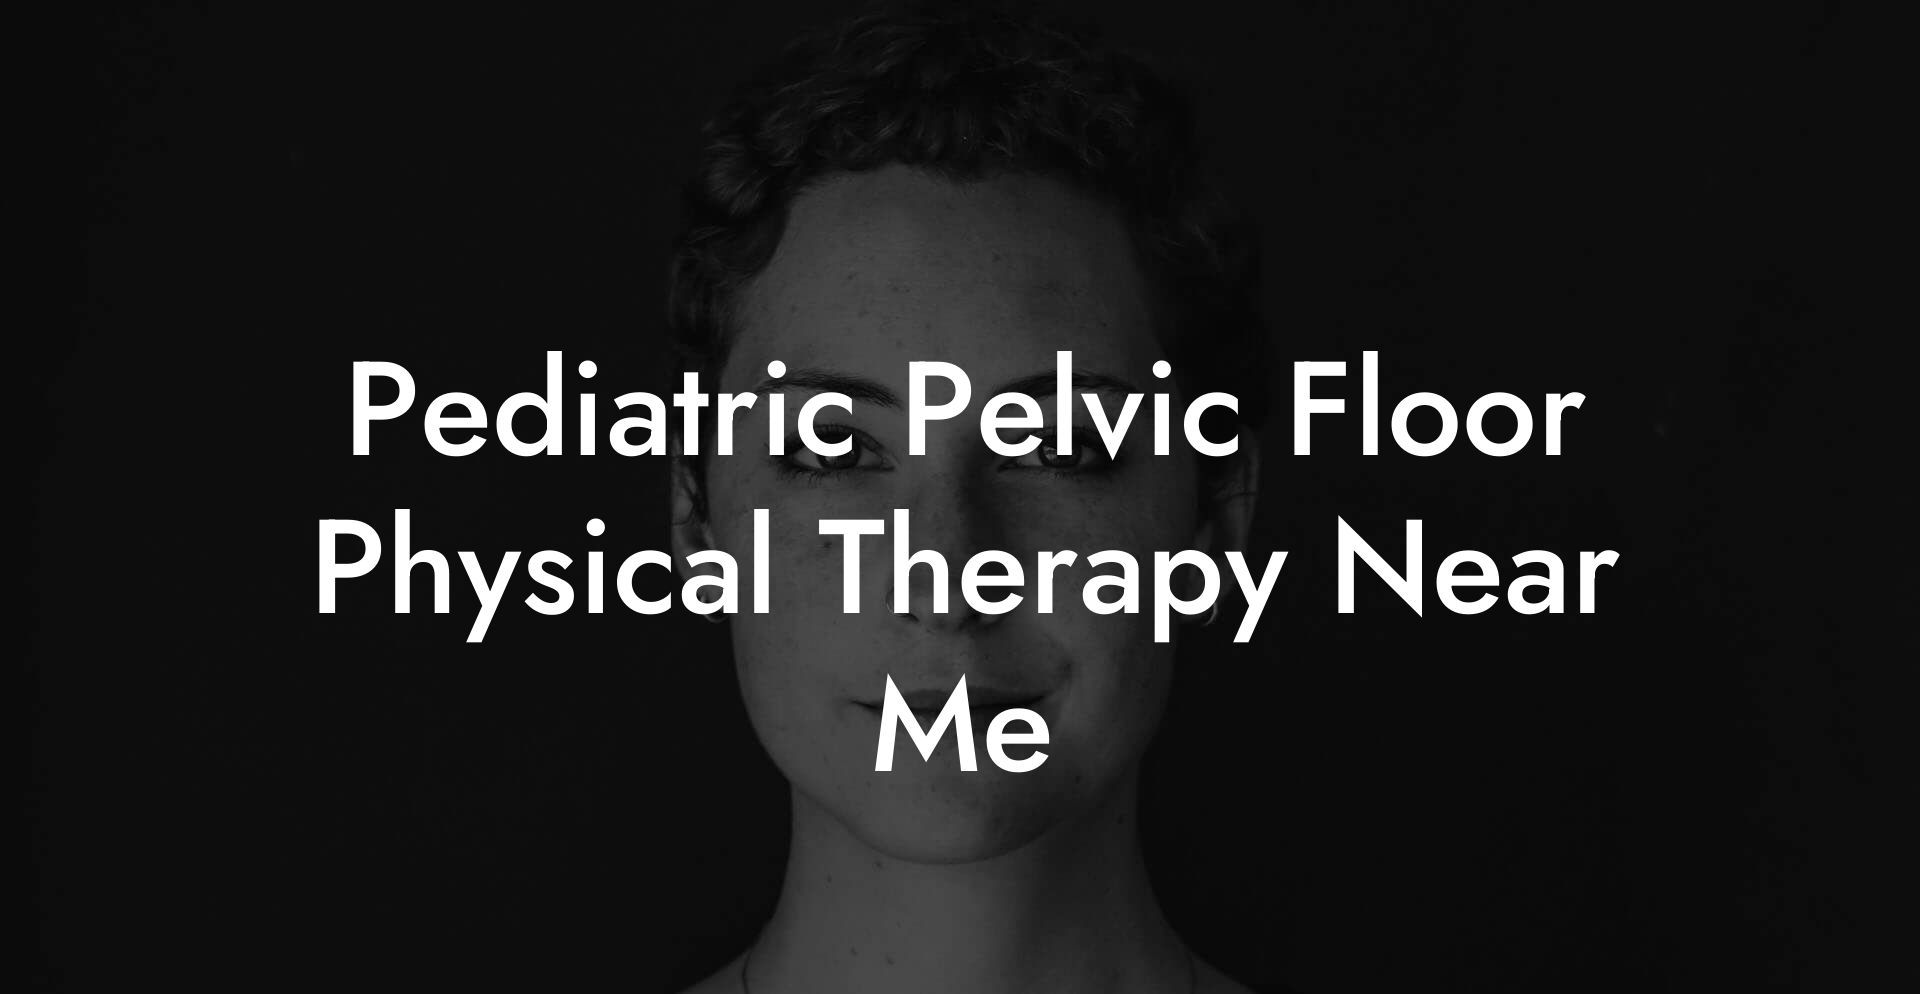 Pediatric Pelvic Floor Physical Therapy Near Me